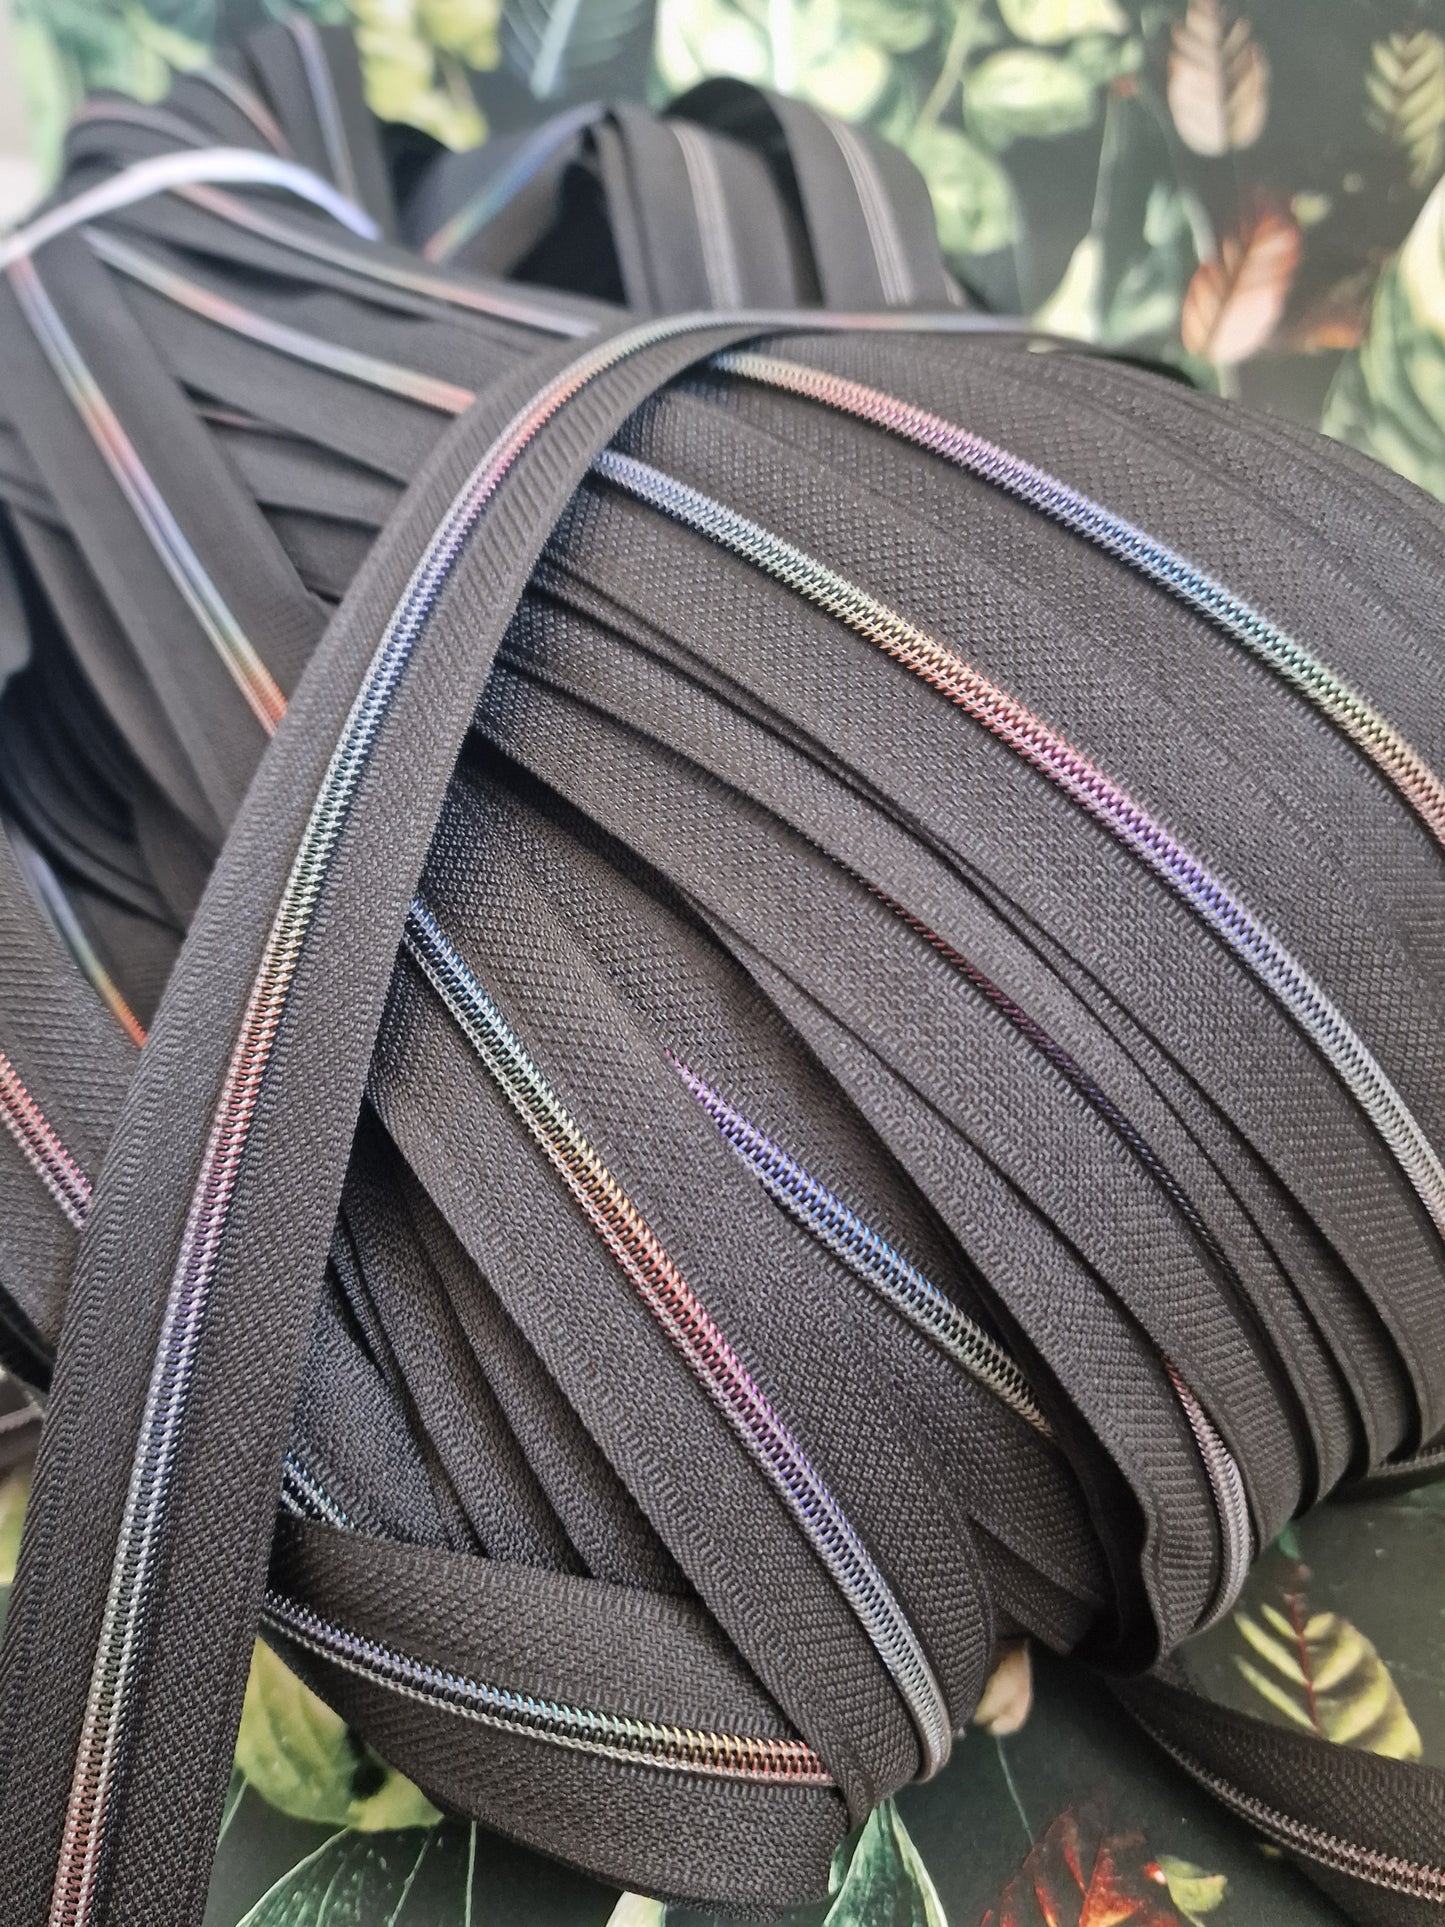 Size 3 Zipper tape Black oil Rainbow